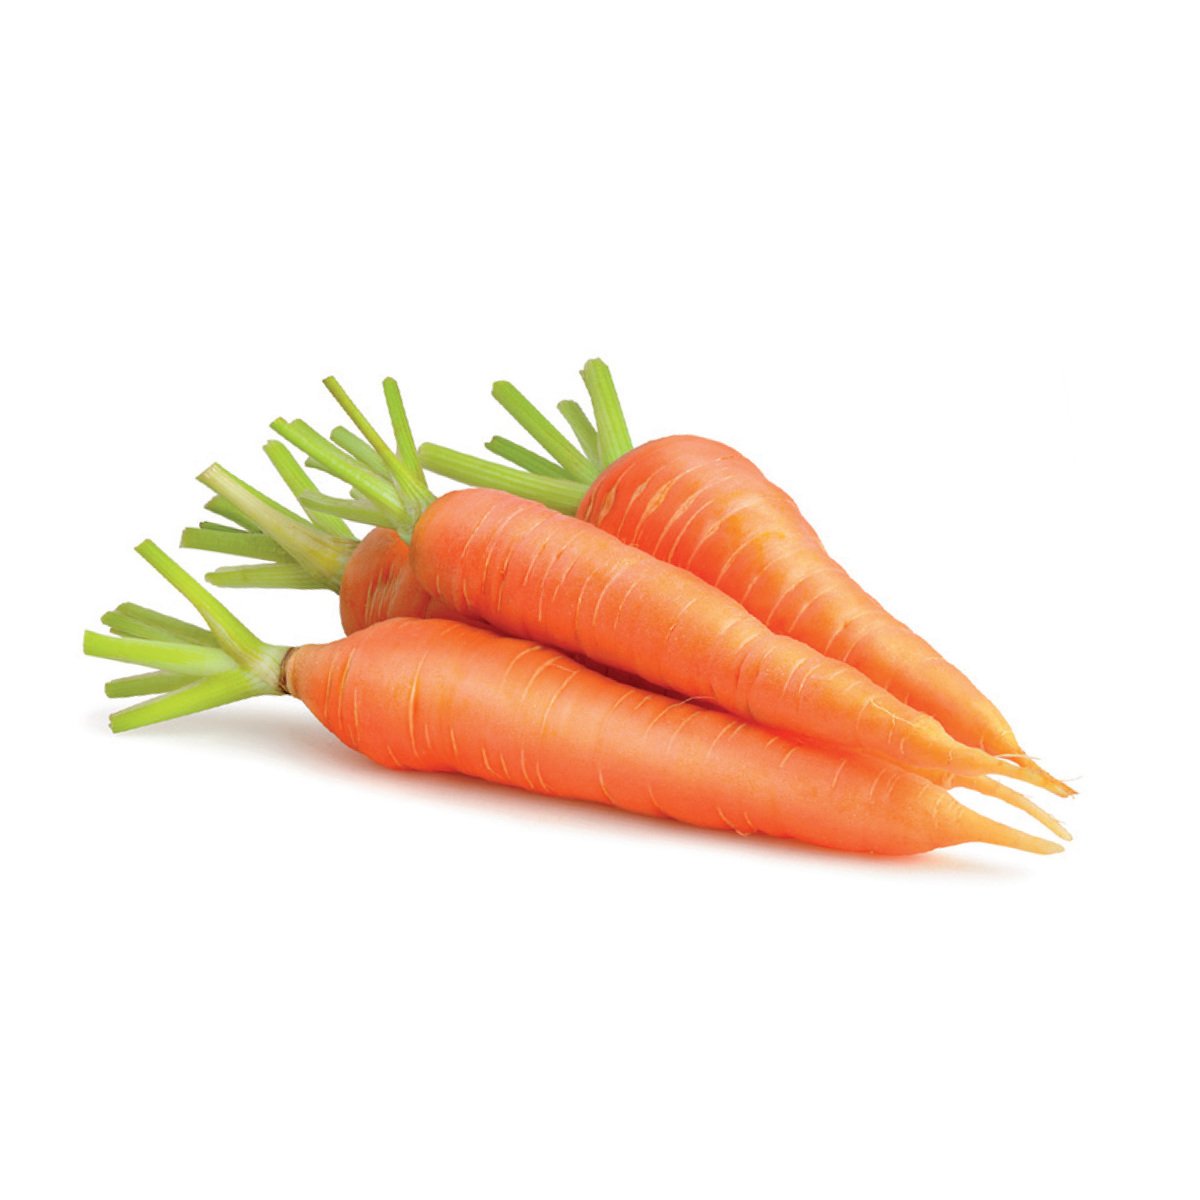 Carrots Nawami Saudi 1pkt